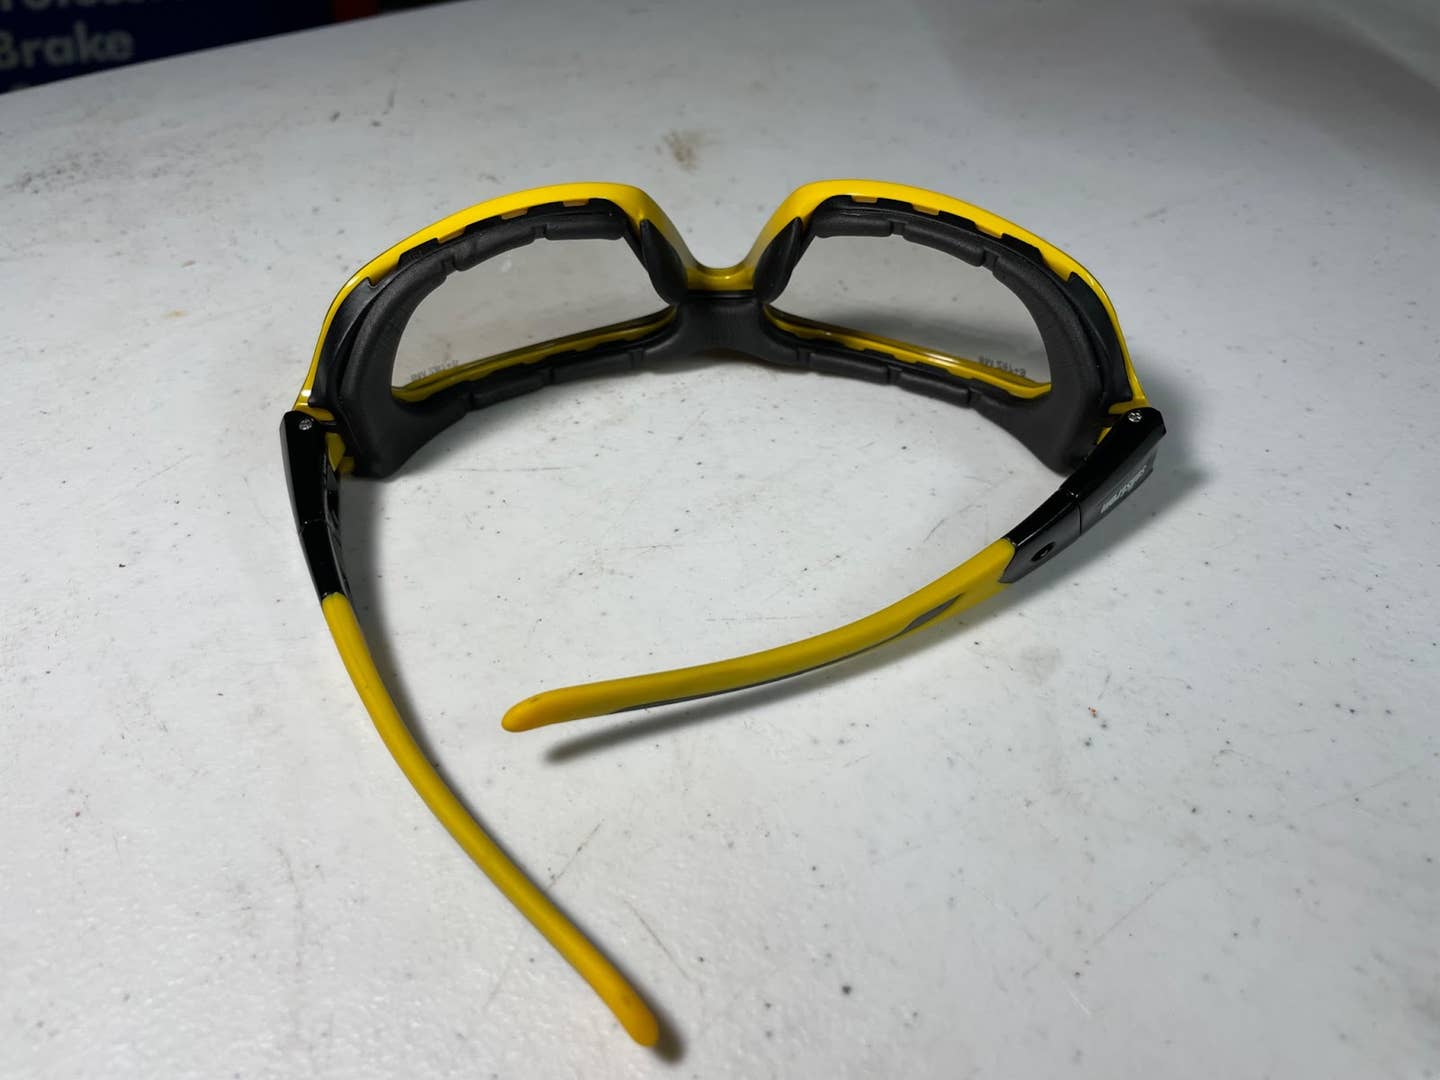 Sellstrom XPS530 Safety Glasses vented foam eye socket